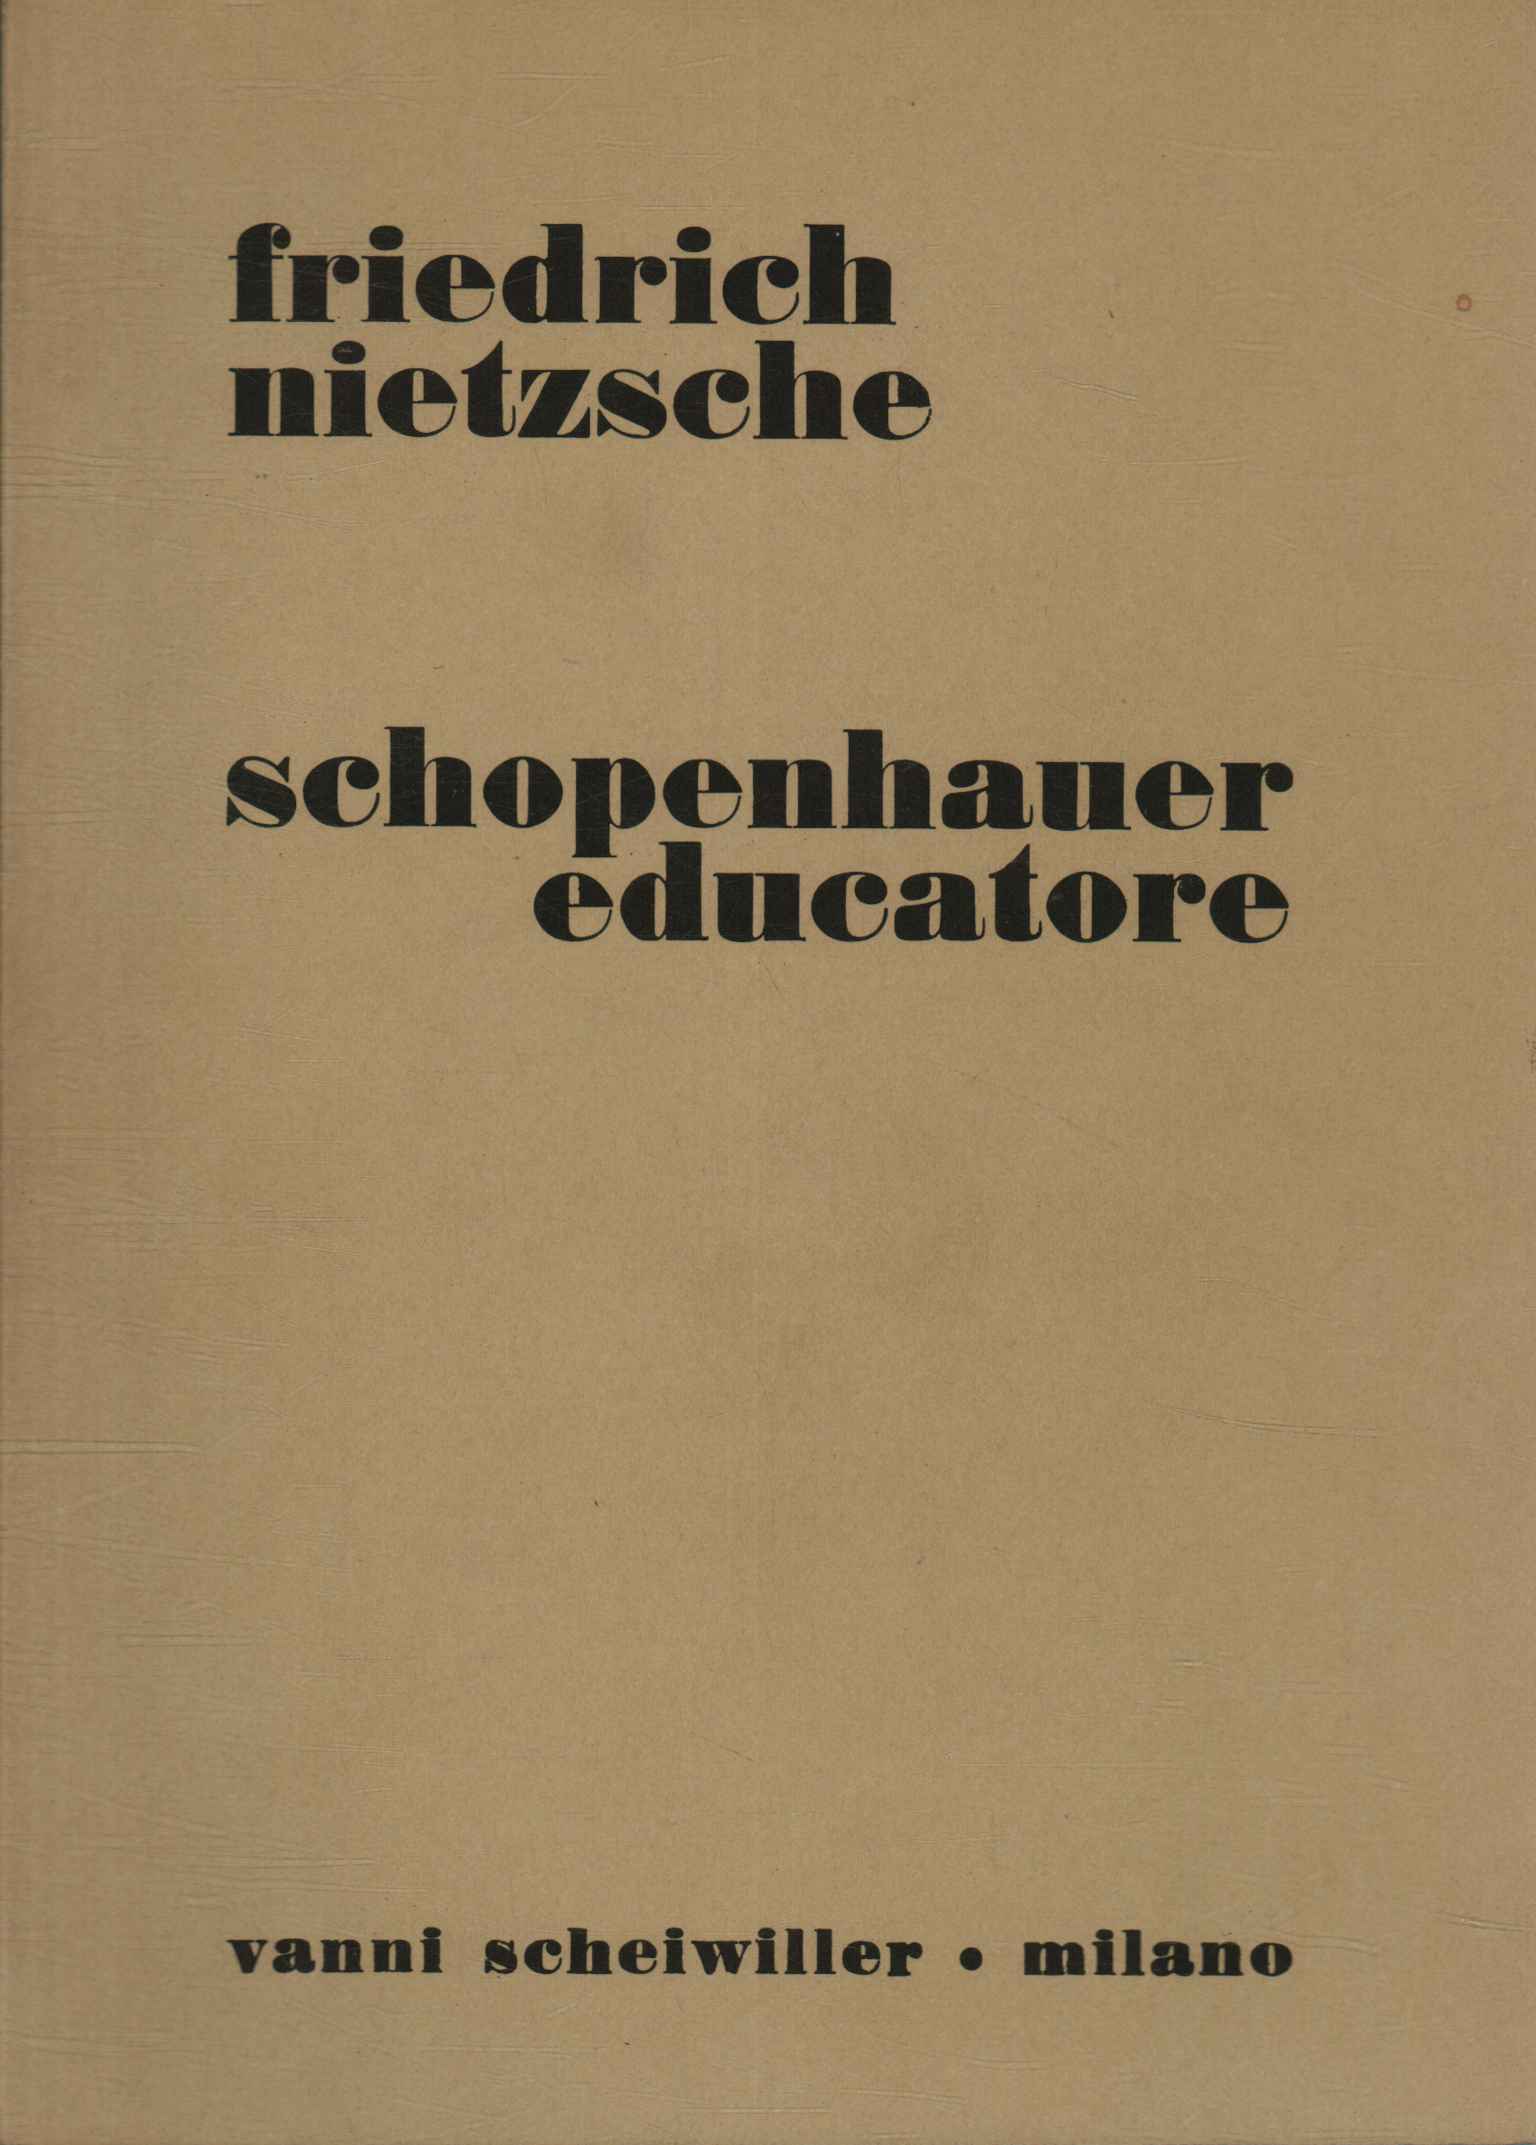 Schopenhauer educator